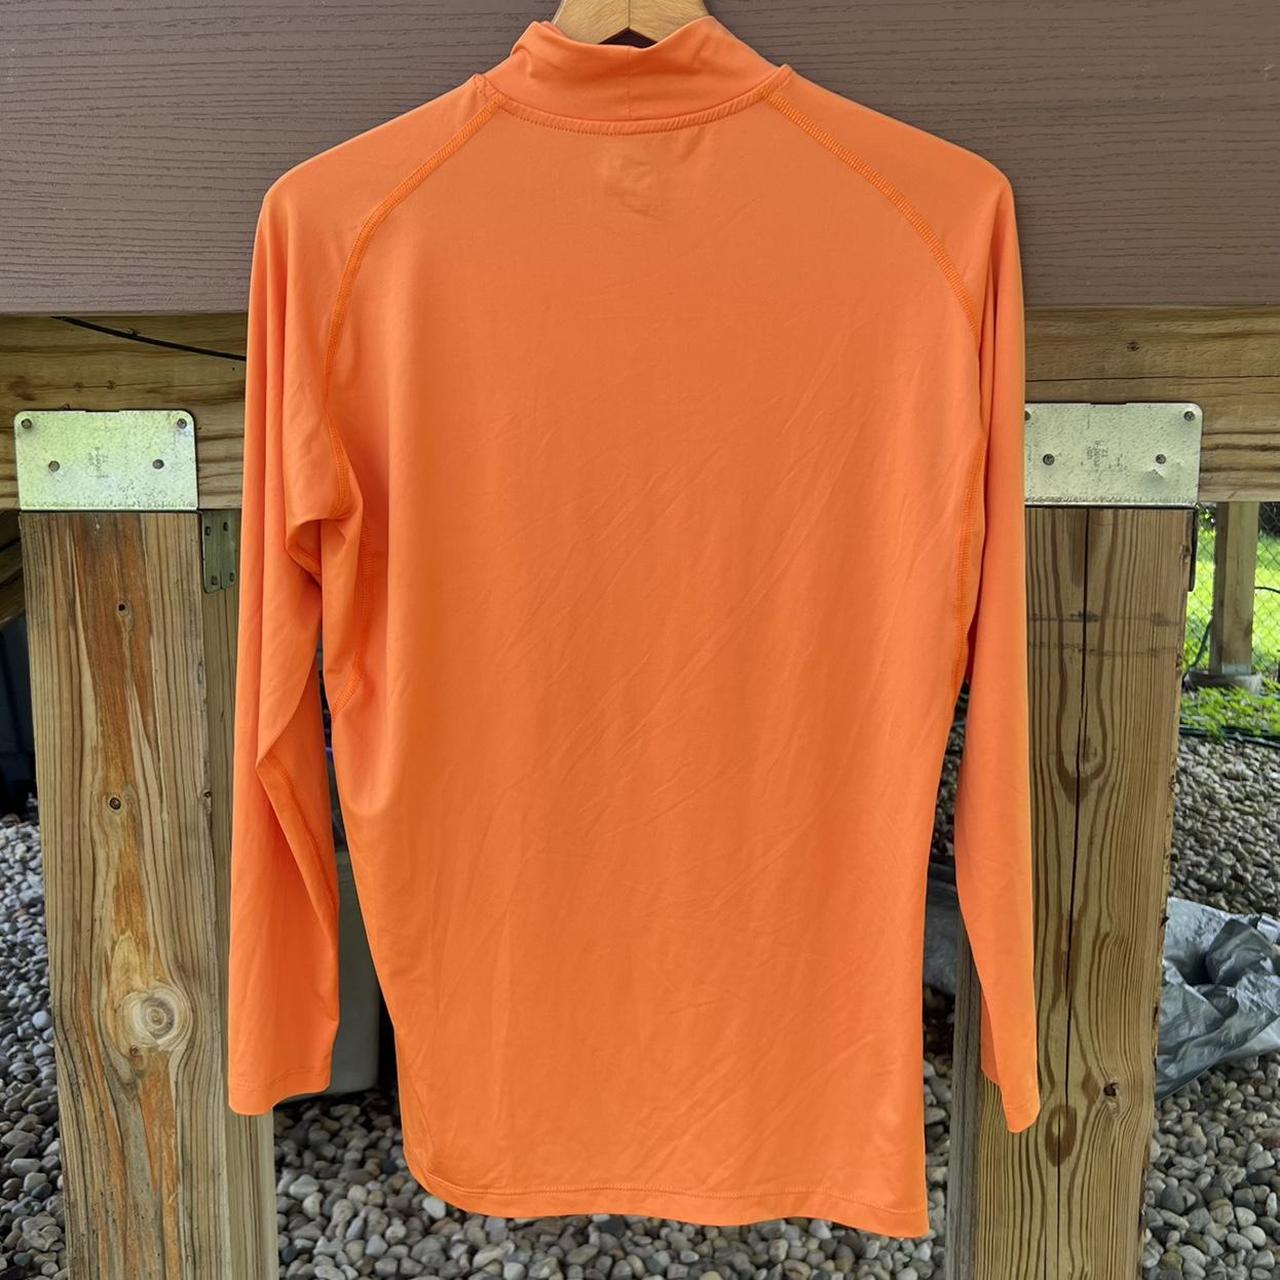 Extreme Fit Men's Orange and White Shirt (2)